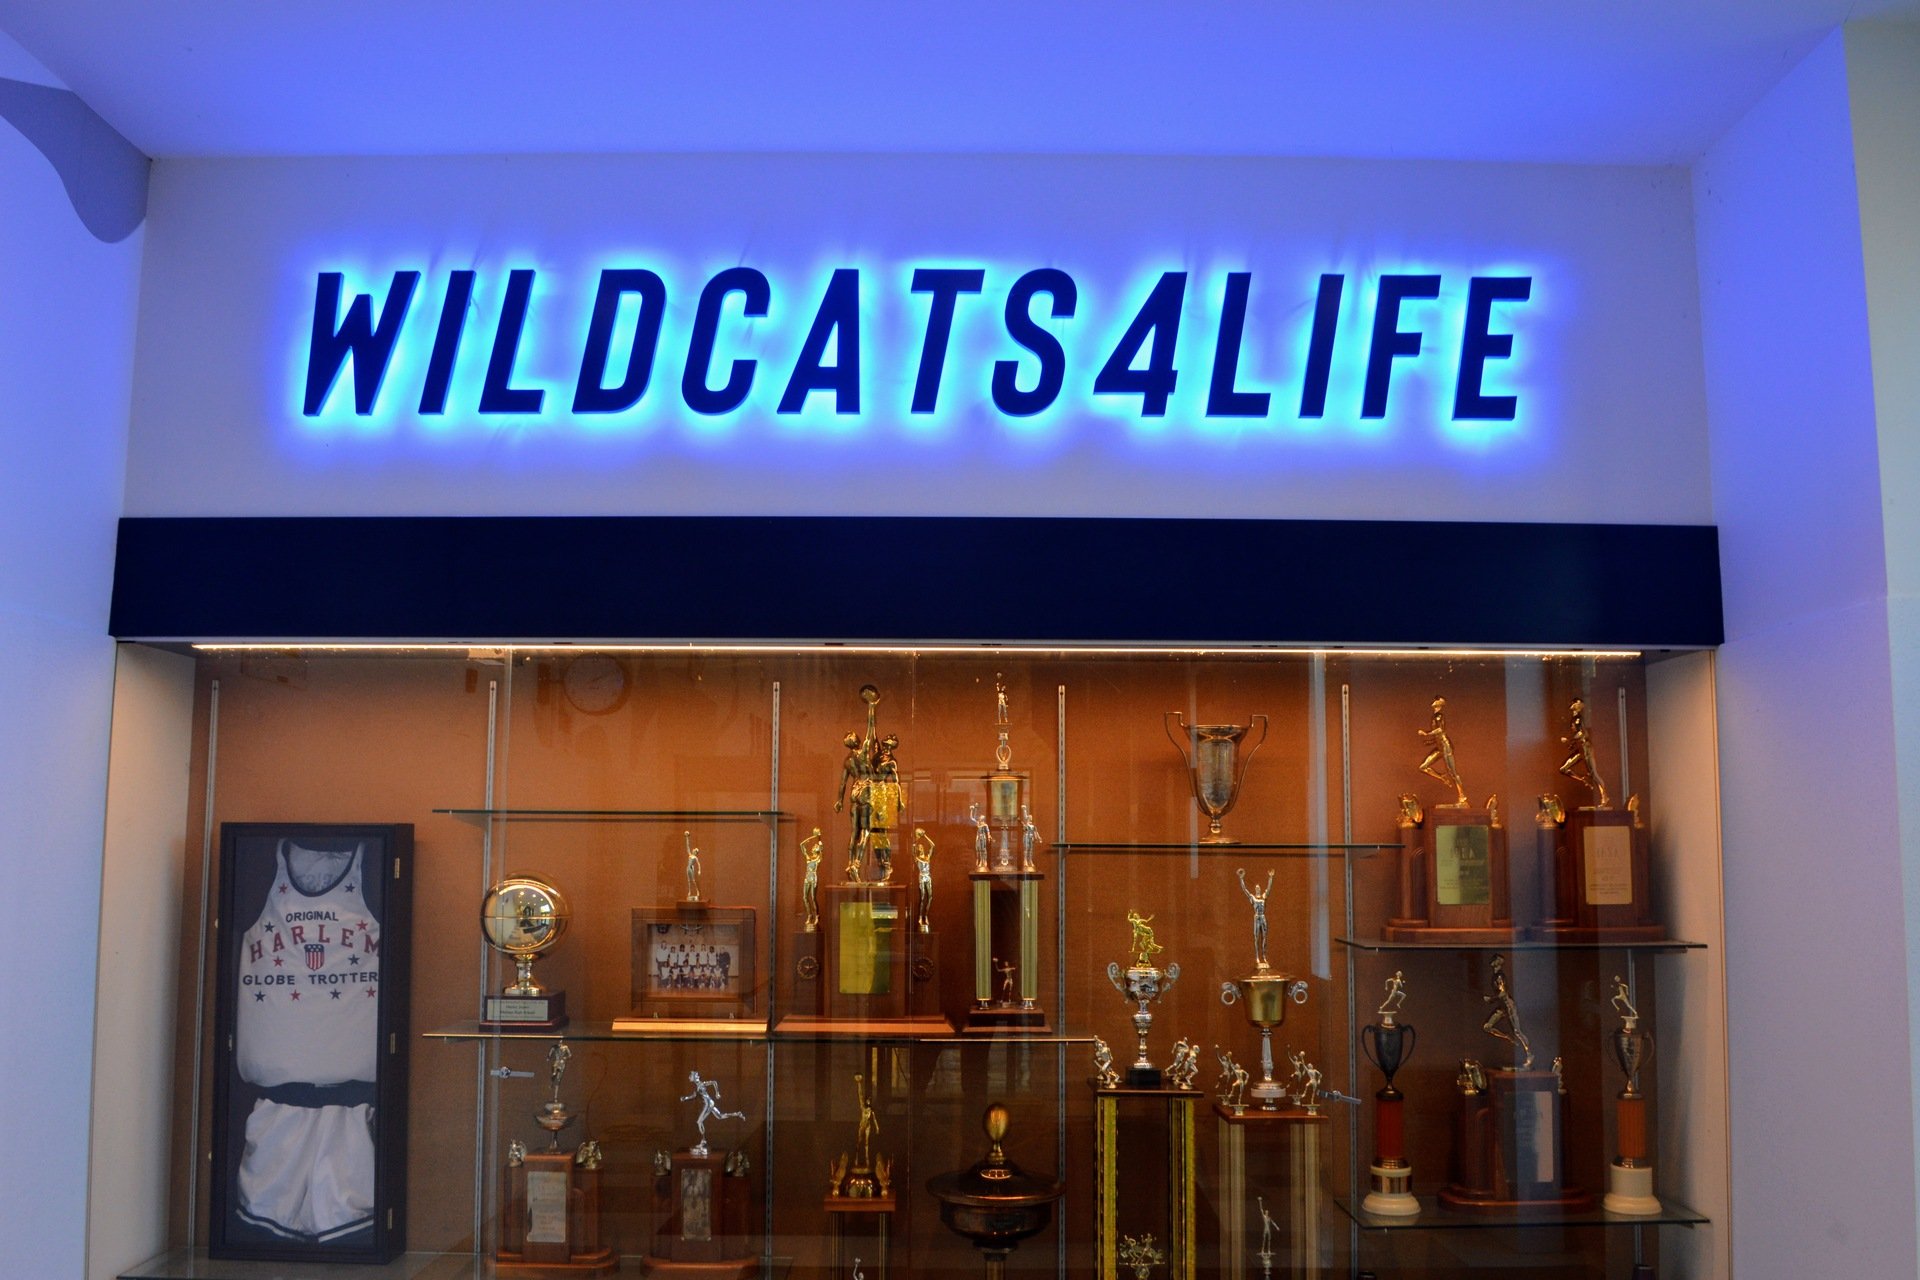 Wildcats4life sign